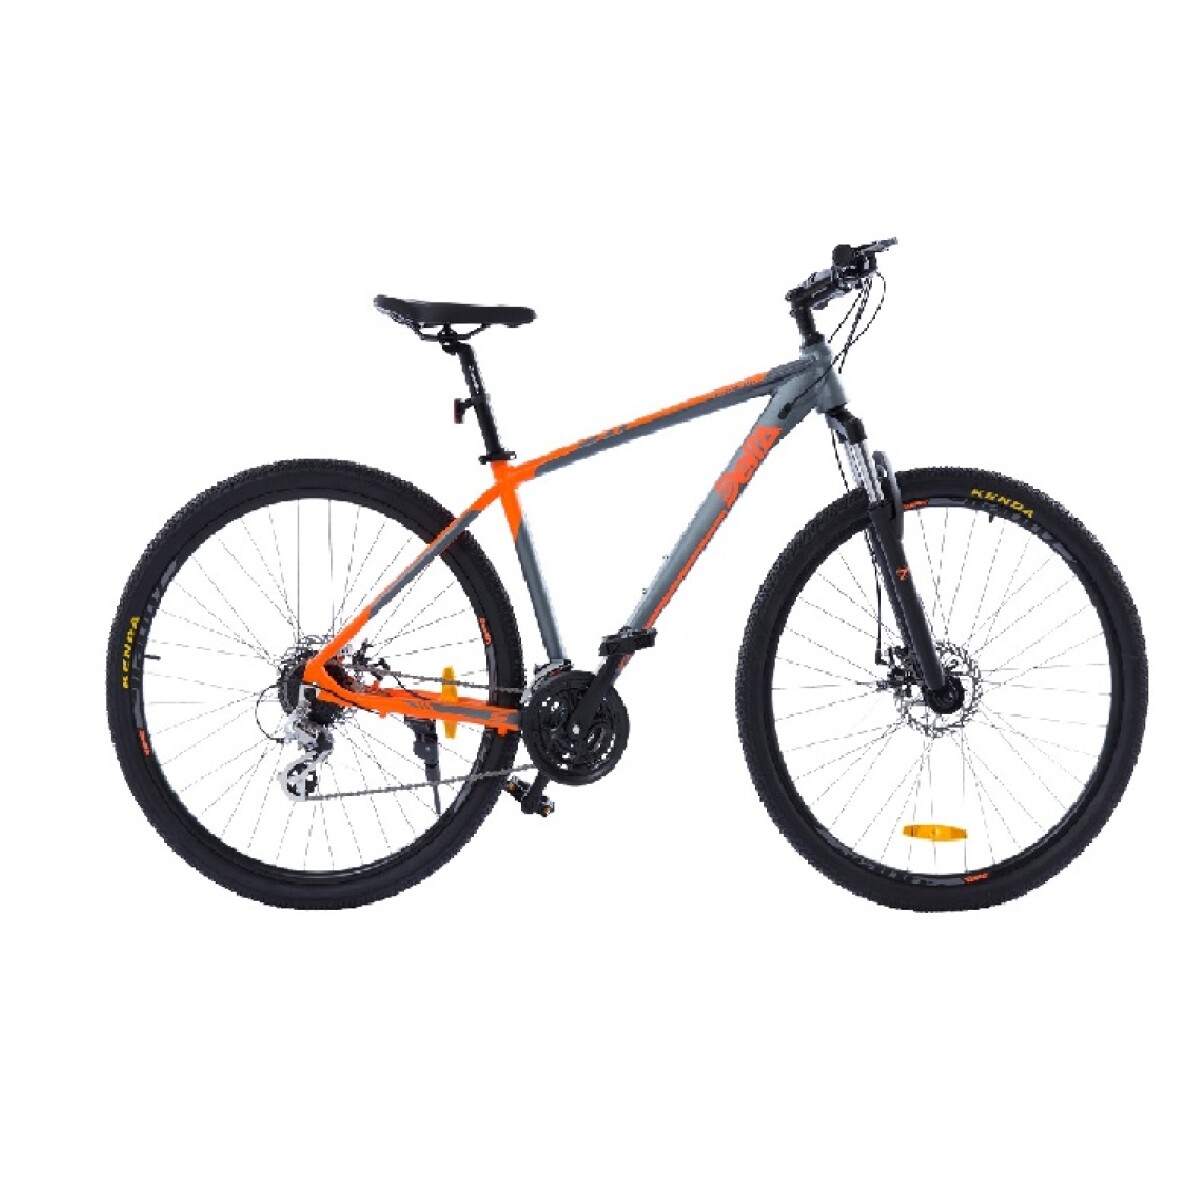 Bicicleta Zanella DELTA S2.40X (L) rod 29" Gris c/anaranjado - 001 